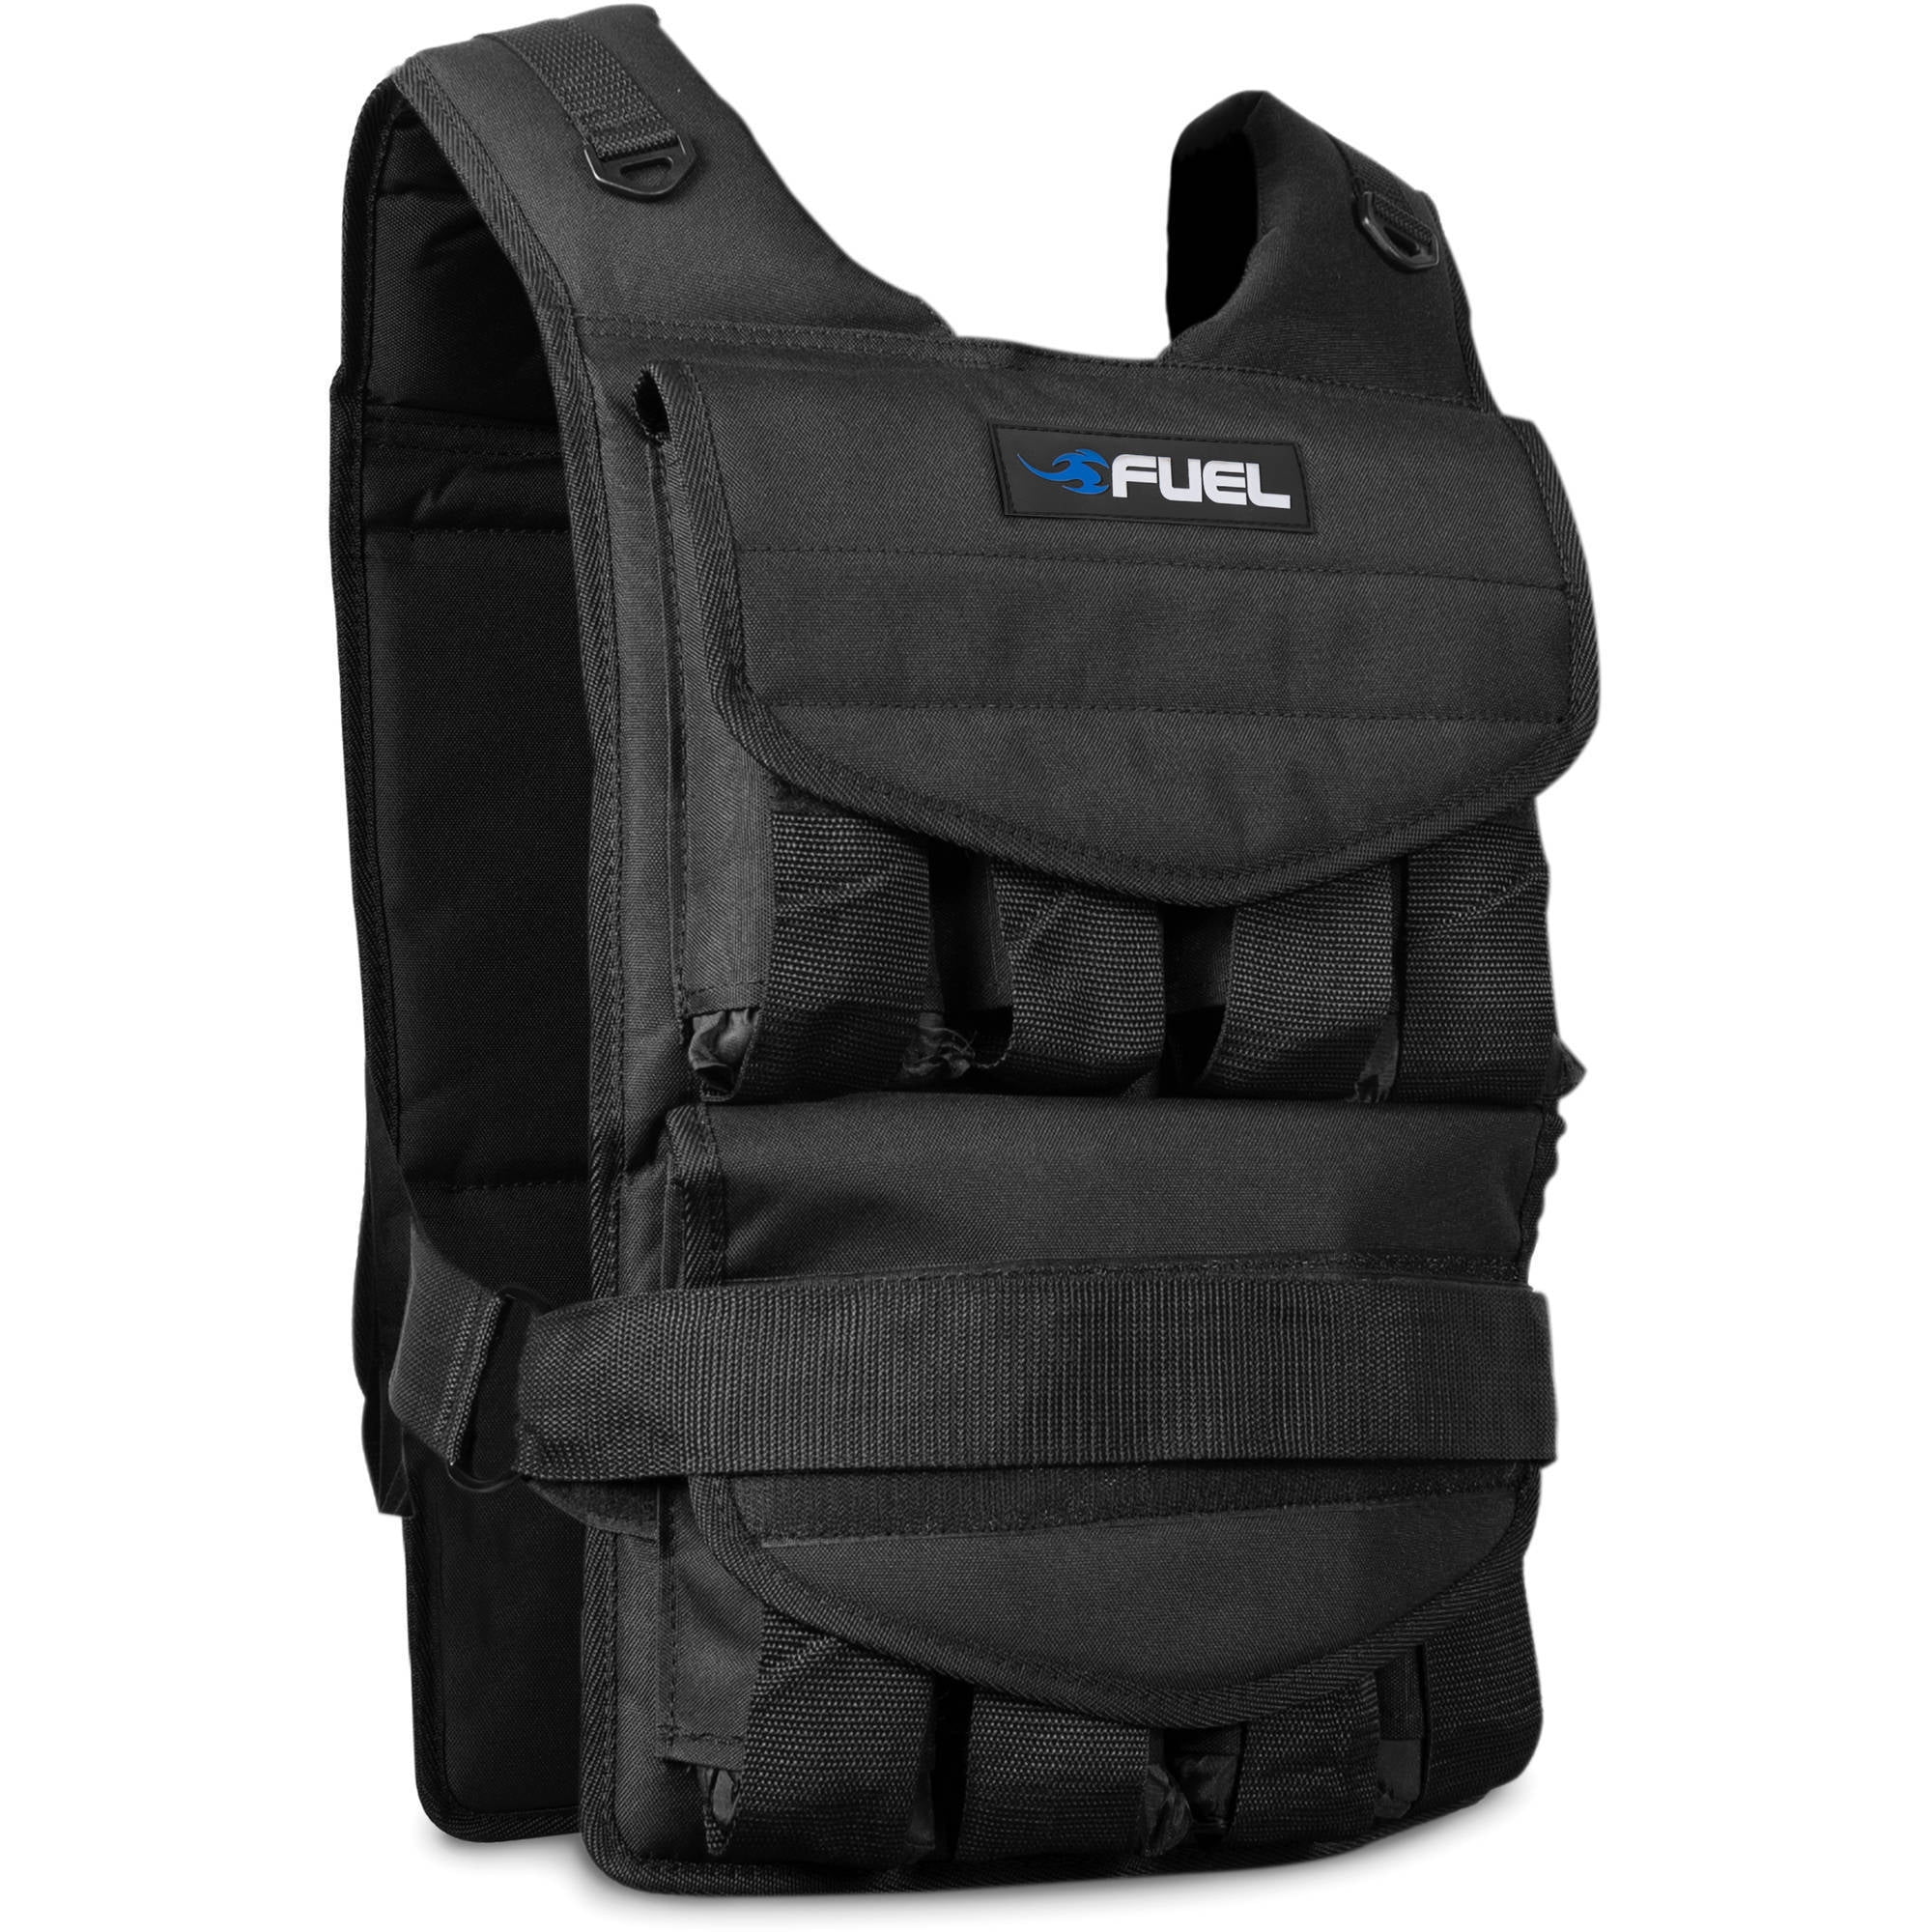 Fuel Pureformance Adjustable Weighted Fitness Vest, 40 Lb